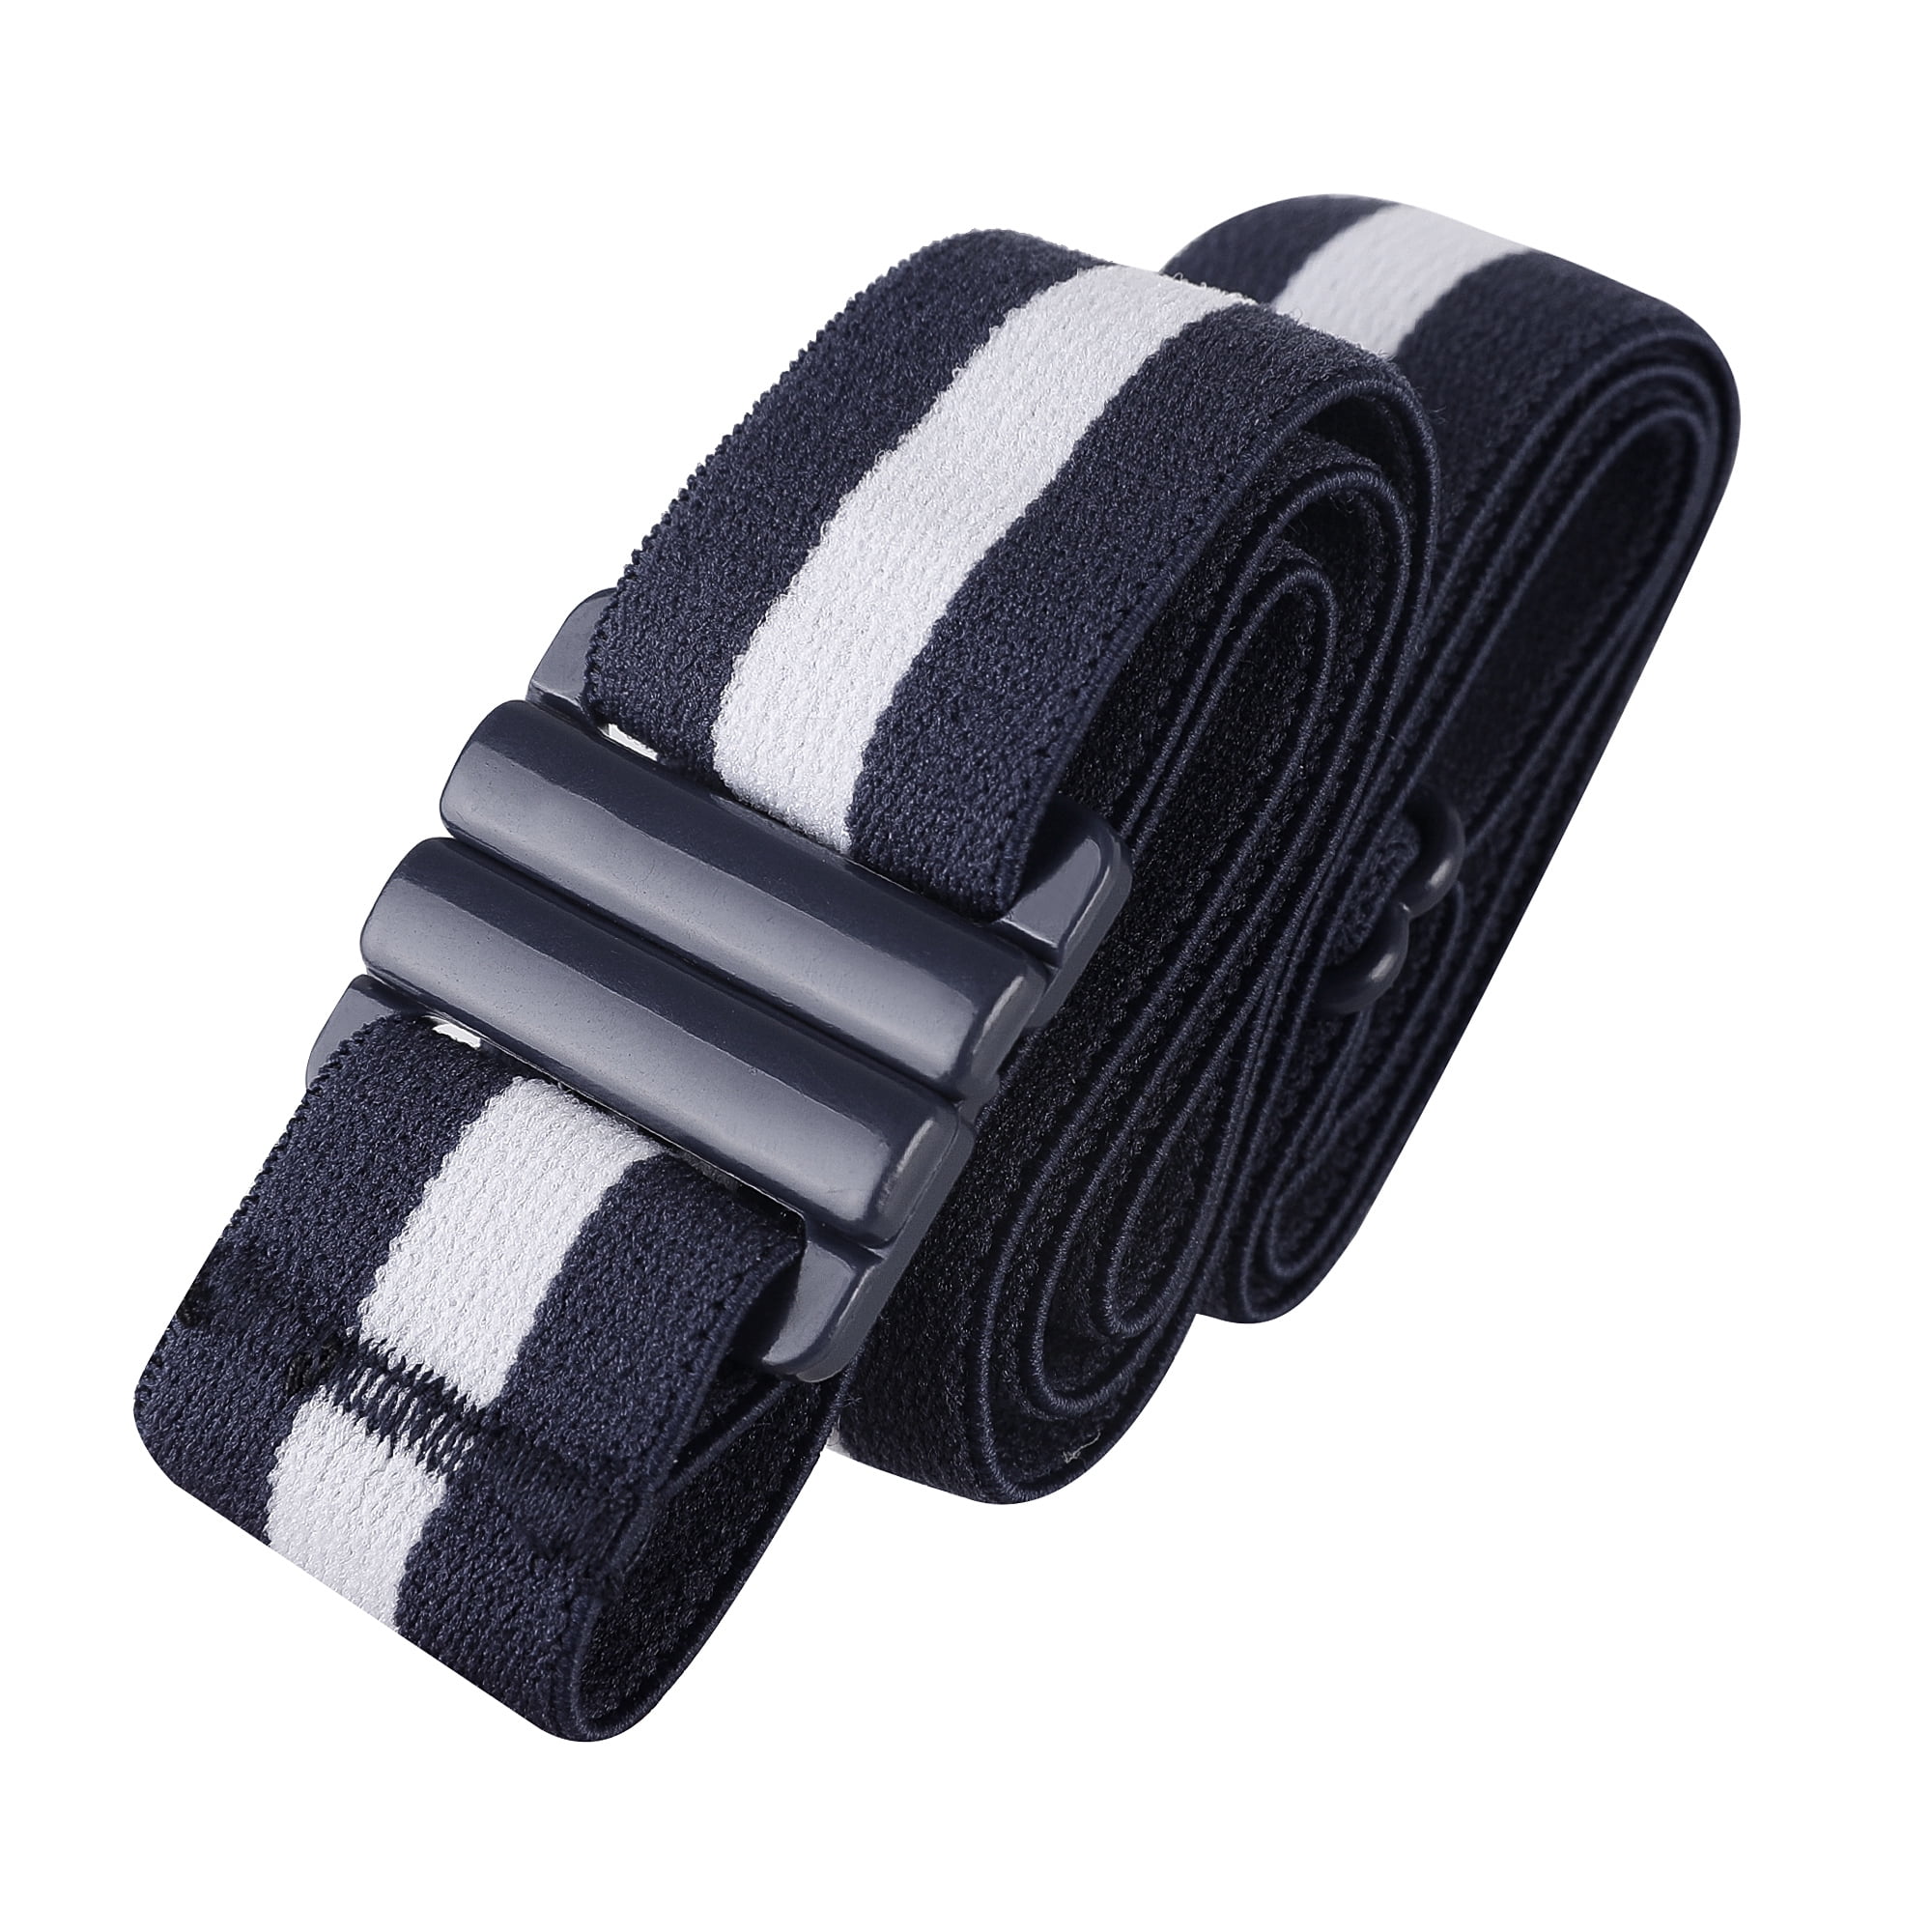 elastic black trouser belts  with non slip strip  chrome colour metal buckle 